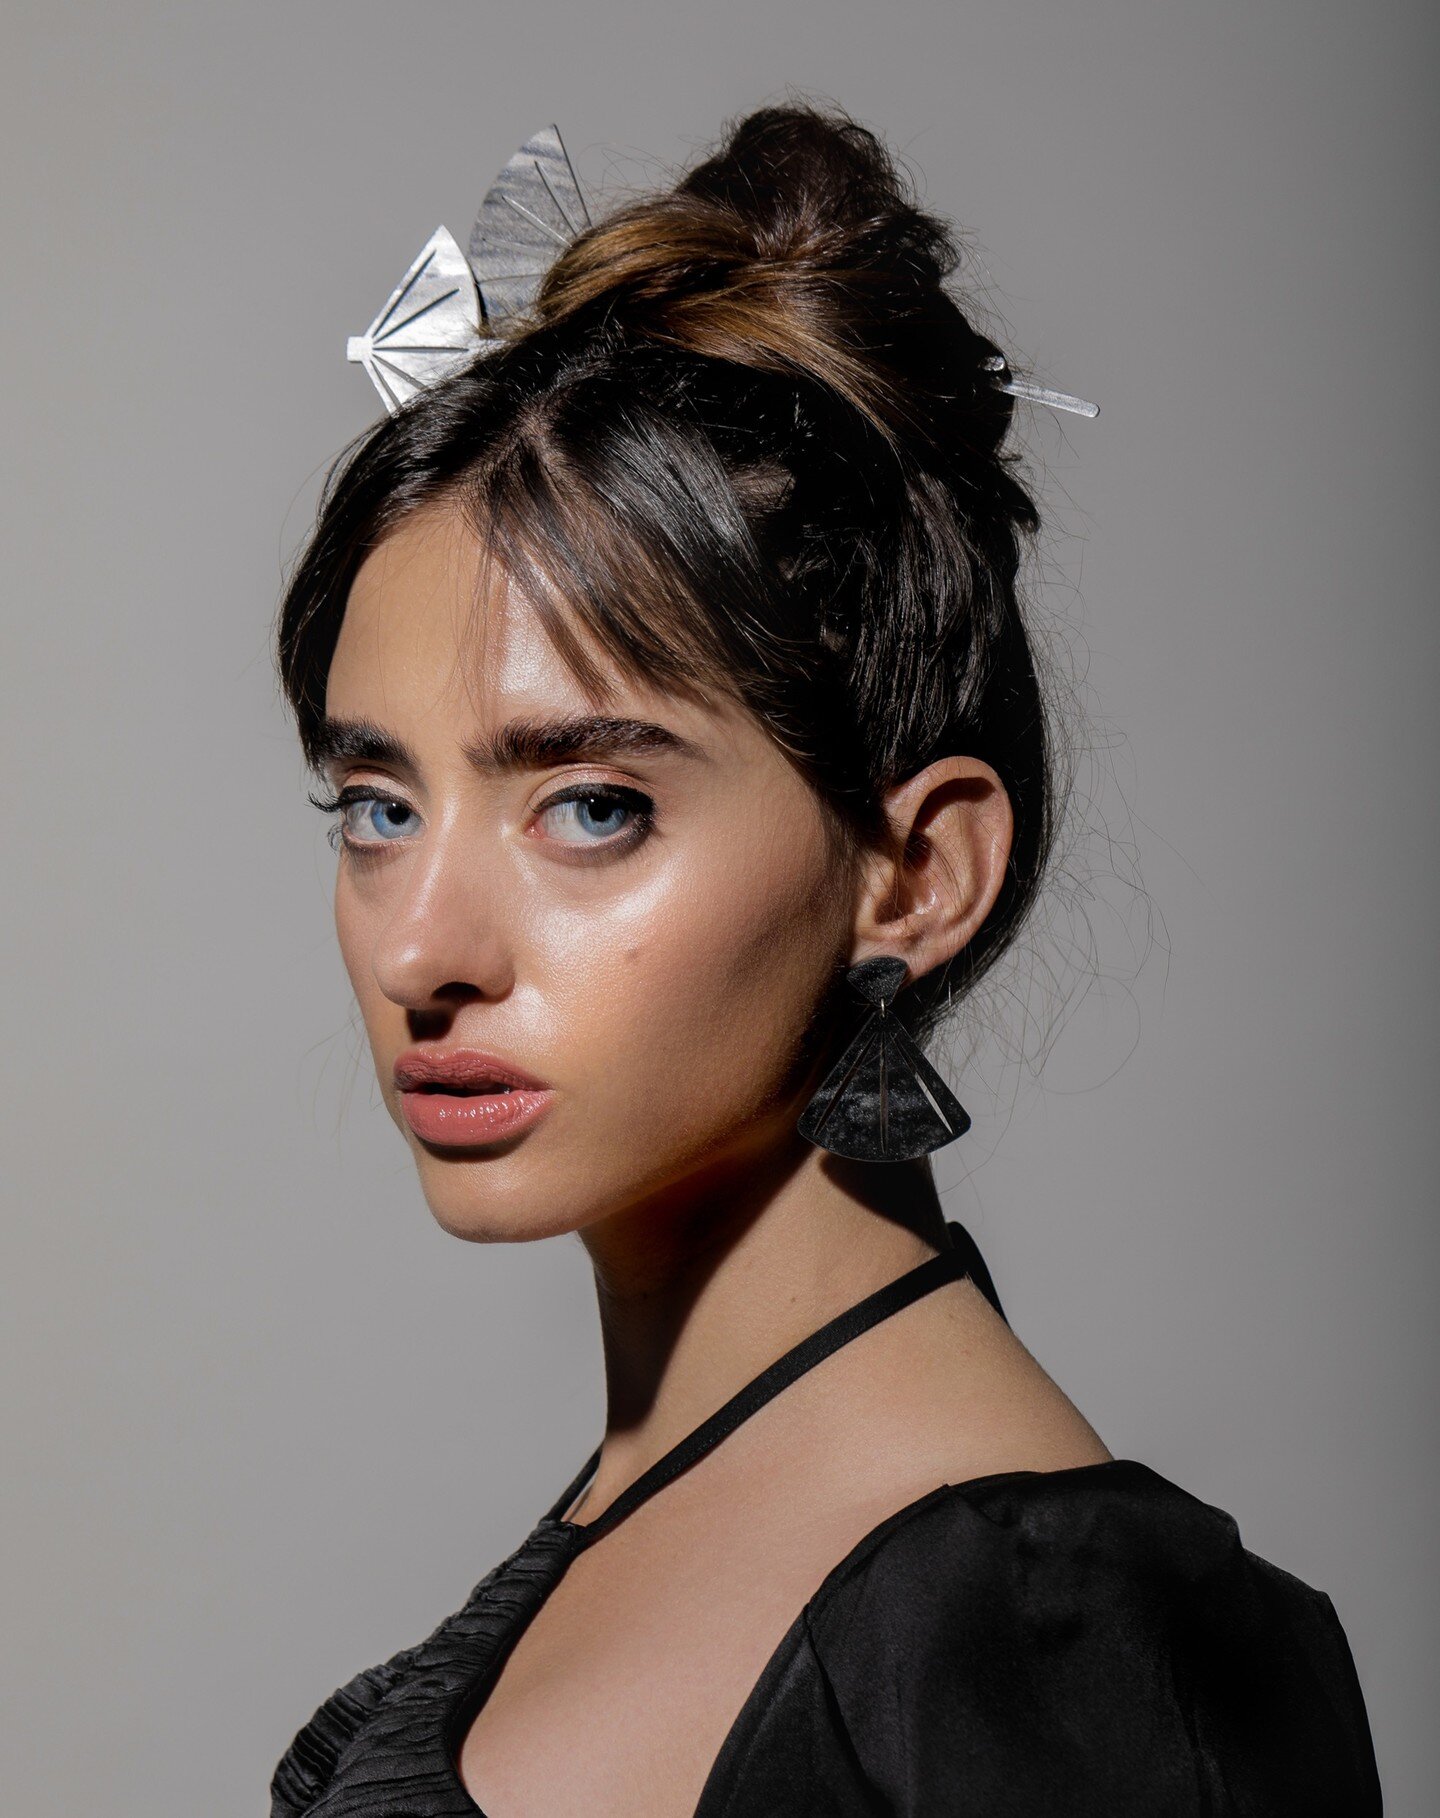 New work with makeup hair by me

PHOTO: @rockwellcreative
MODEL: @justine_vivian 
MUA/HAIR: @shanaastrachan @foxanddoll 
STYLIST: @zuringilbus
ACCESSORIES: @shopfoxanddoll 
 
#bayareacreatives
#studioportrait 
#portrait 
#womensfashion 
#fallfashion
